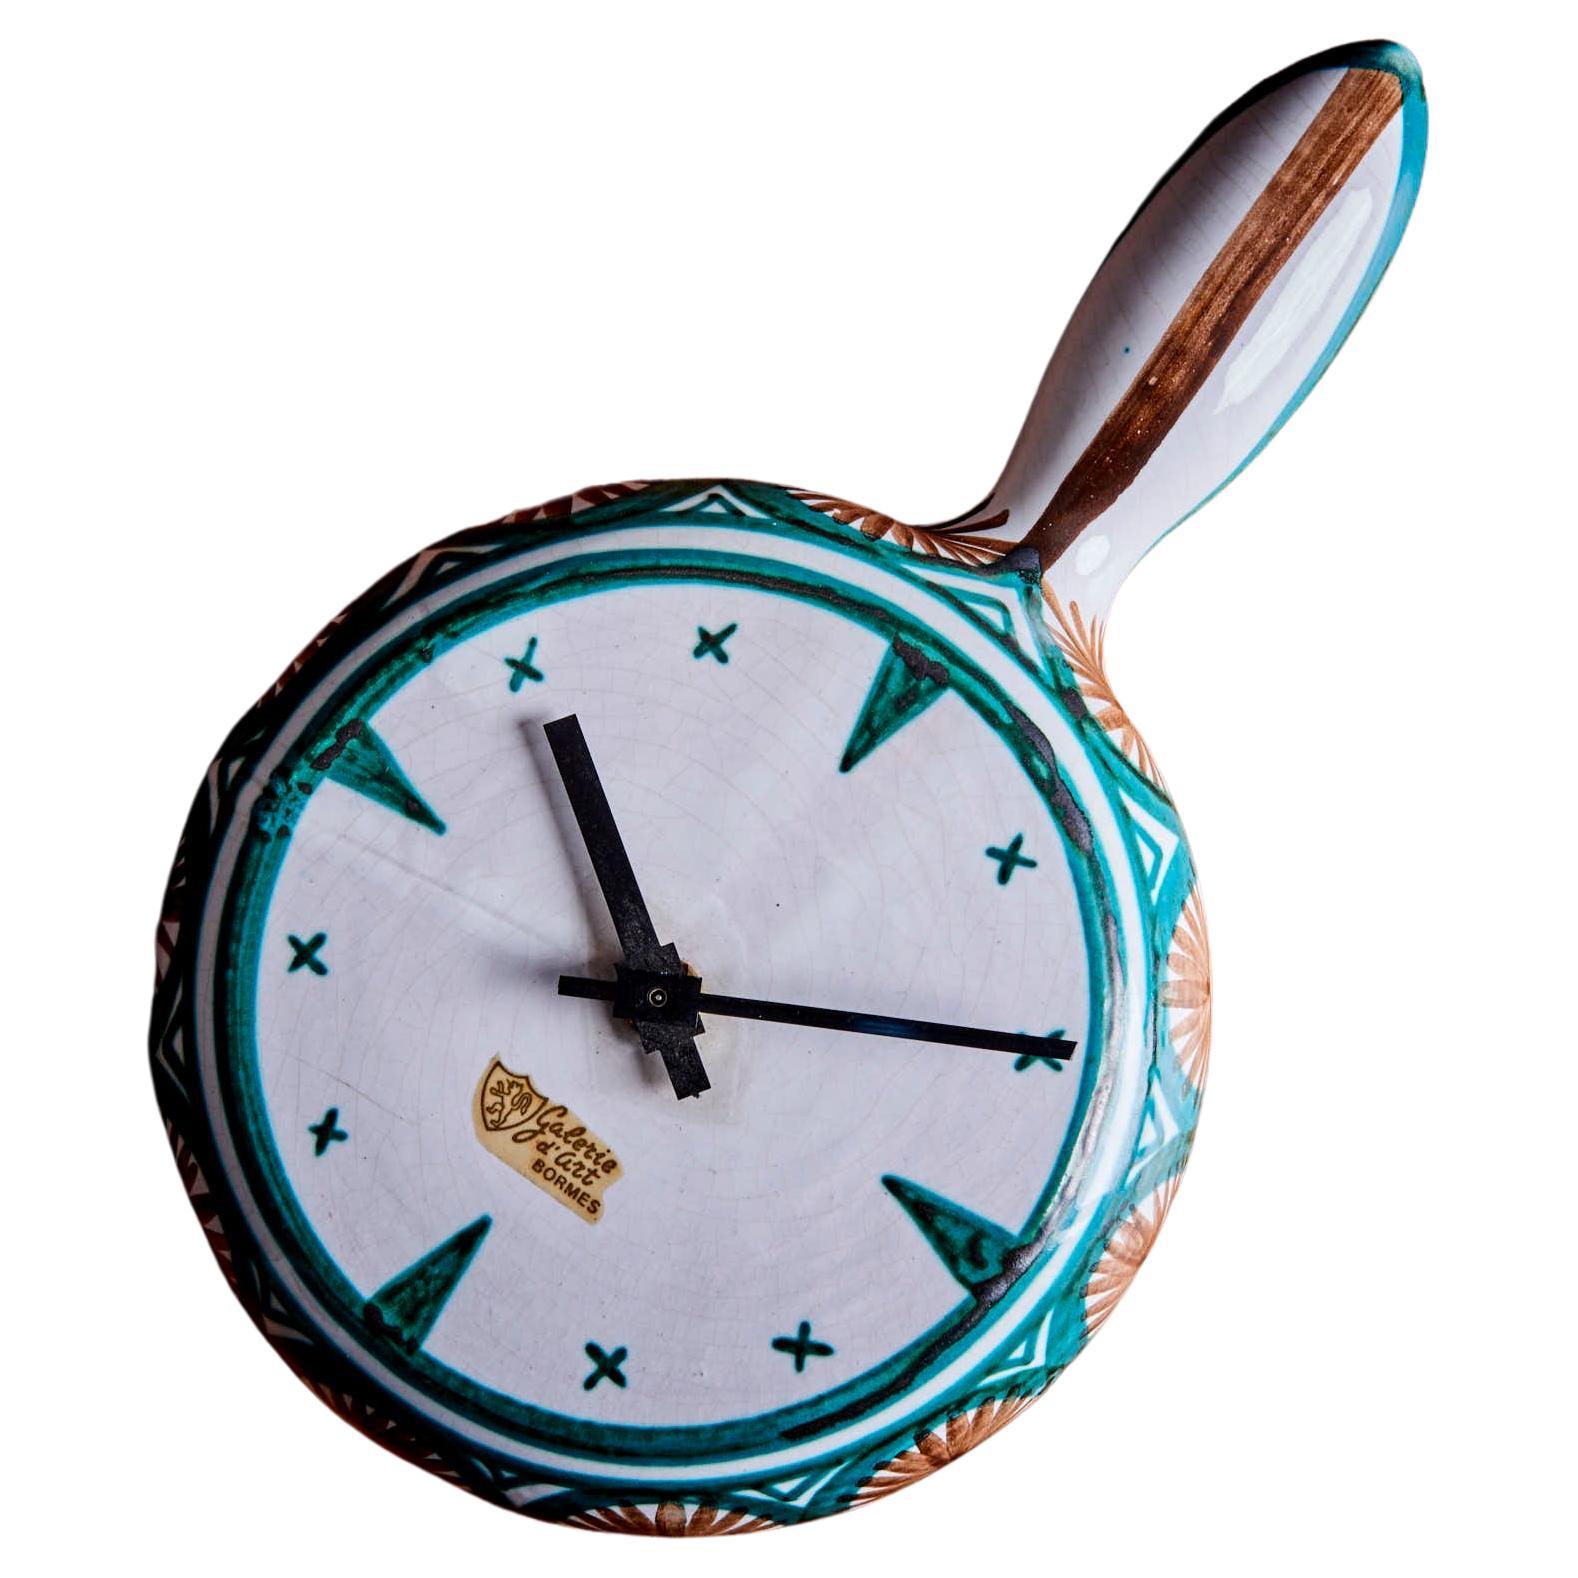 https://a.1stdibscdn.com/robert-picault-ceramic-clock-france-1950s-for-sale/f_15912/f_376377721702989658918/f_37637772_1702989659439_bg_processed.jpg